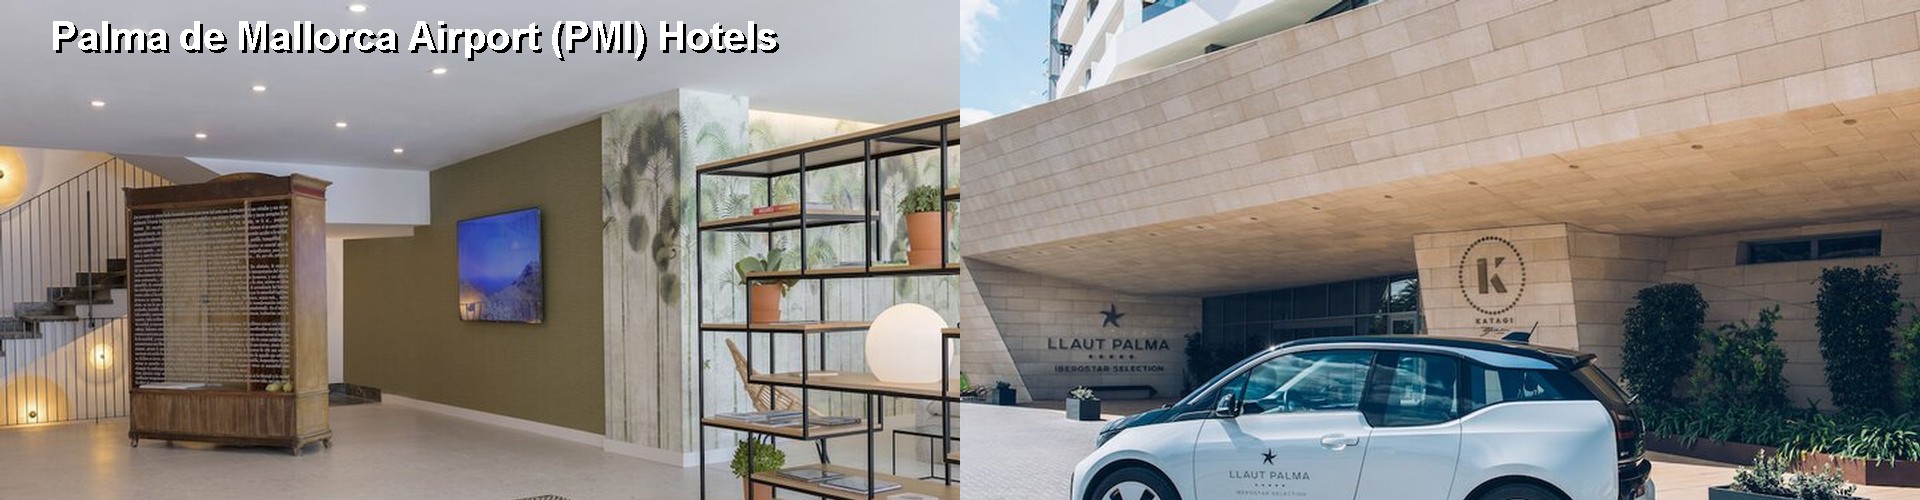 5 Best Hotels near Palma de Mallorca Airport (PMI)